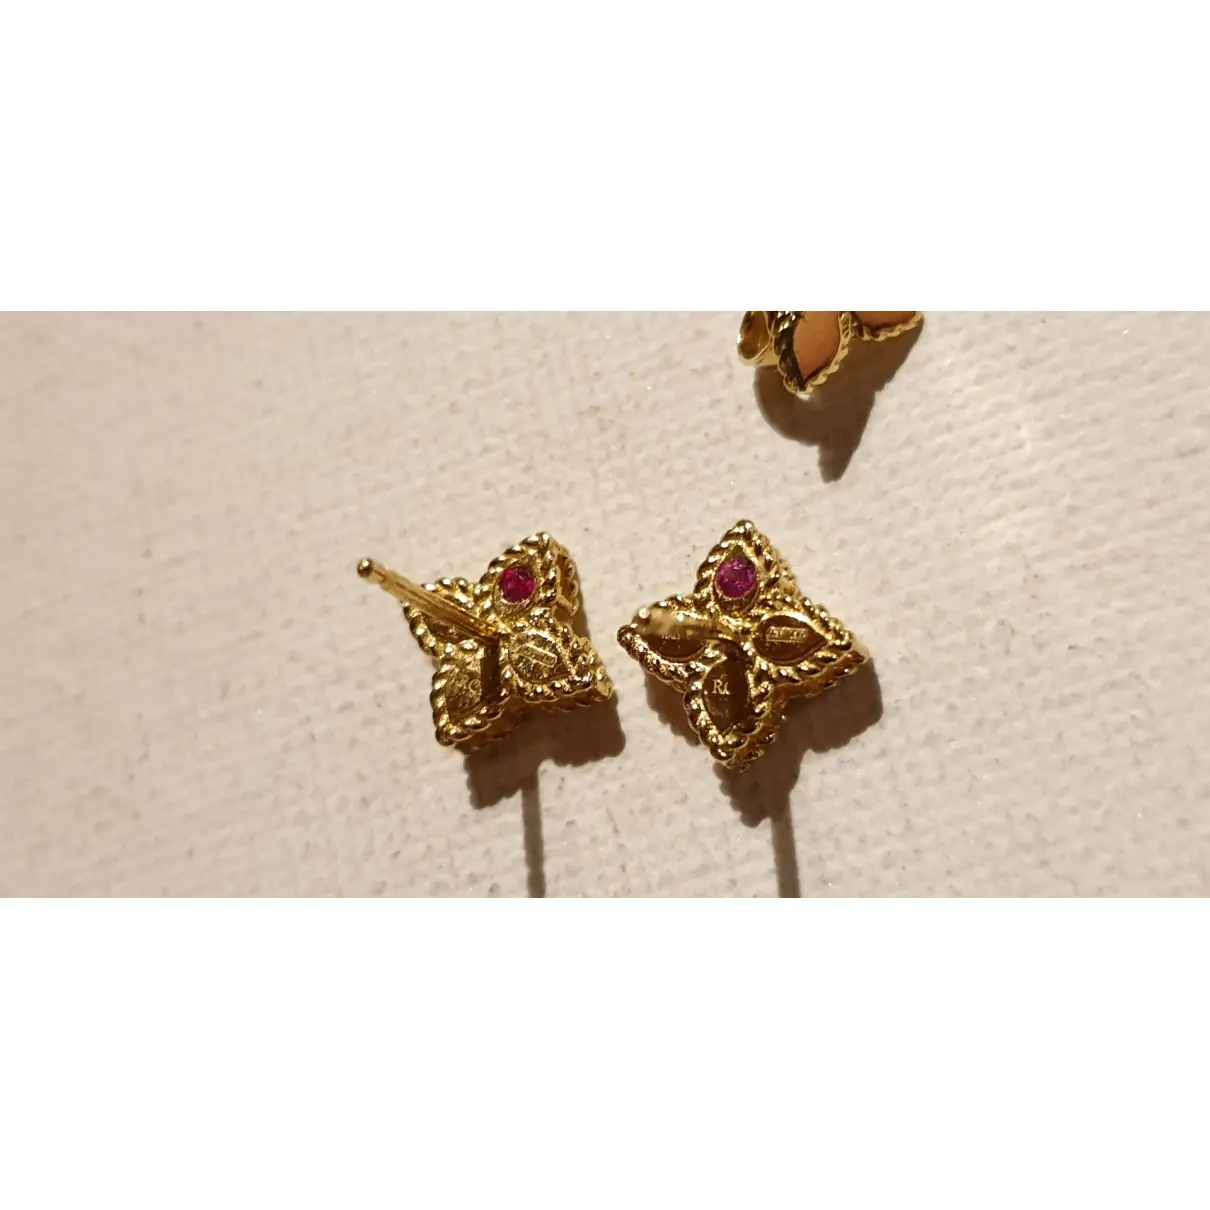 Buy Roberto Coin Yellow gold earrings online